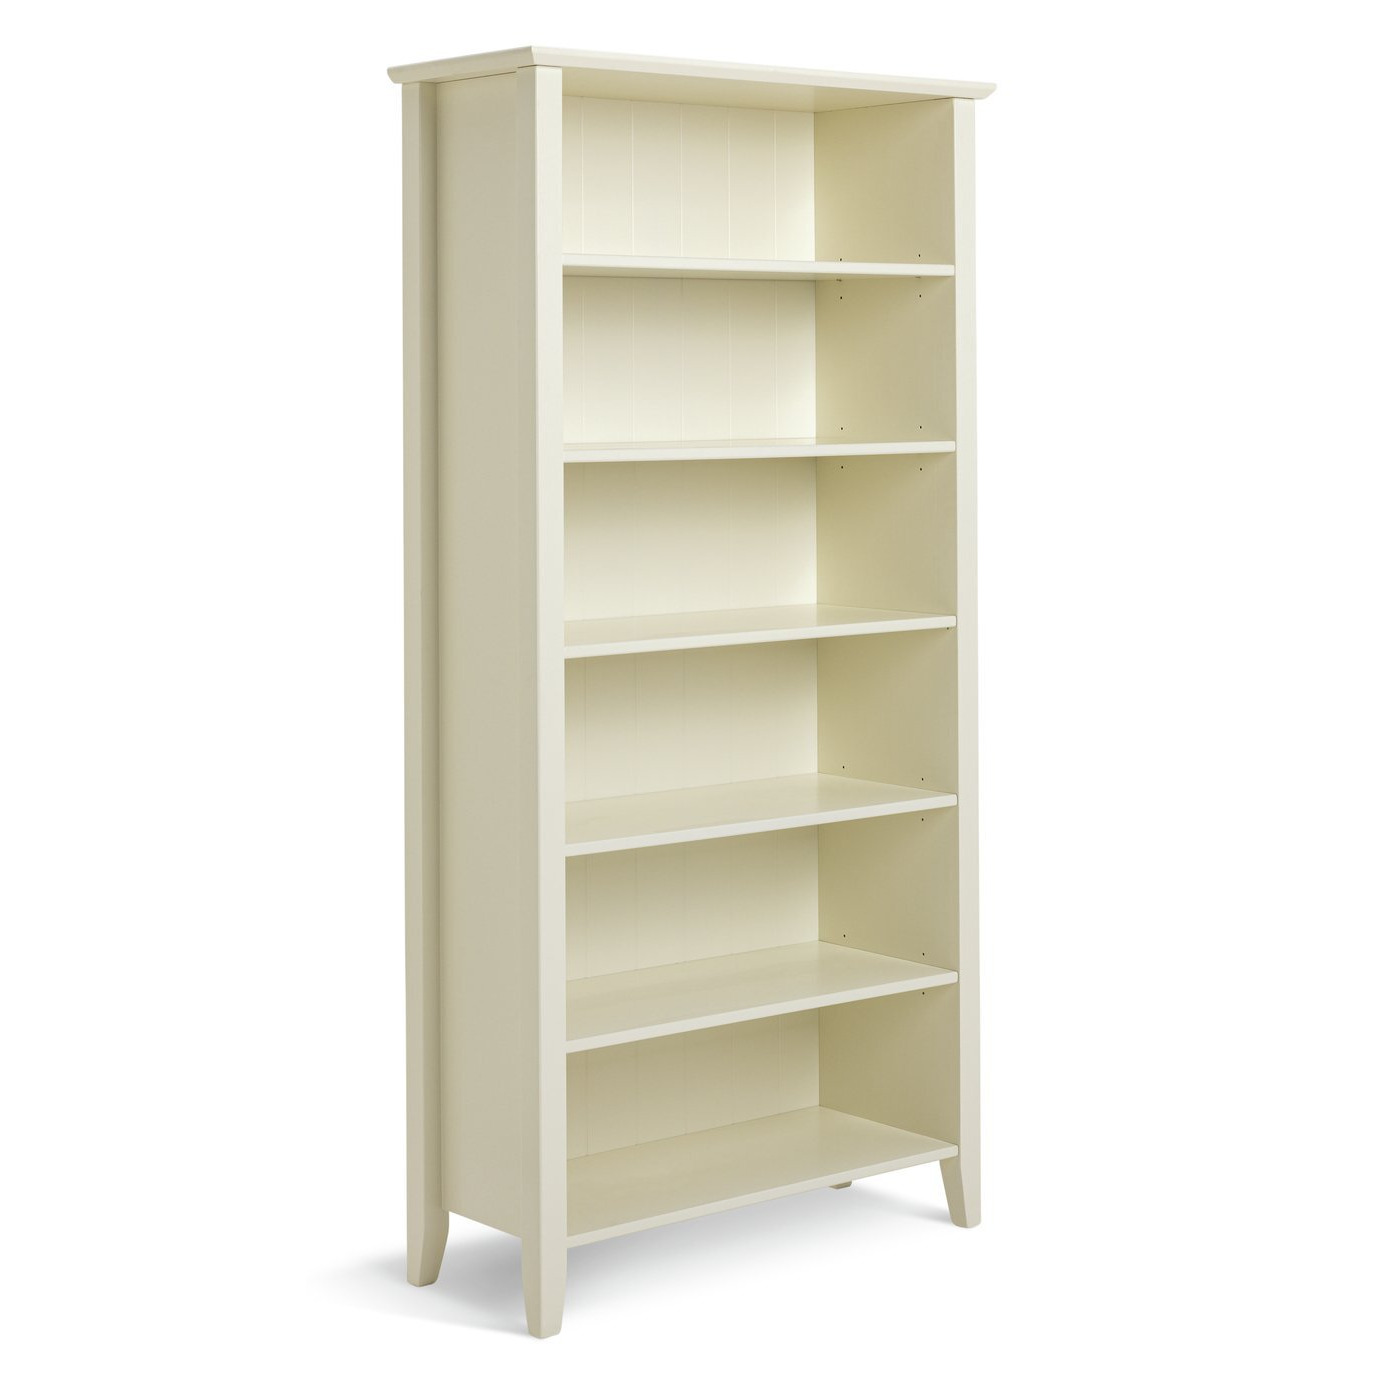 Habitat Kingham Tall Solid Wood Bookcase - Ivory - image 1